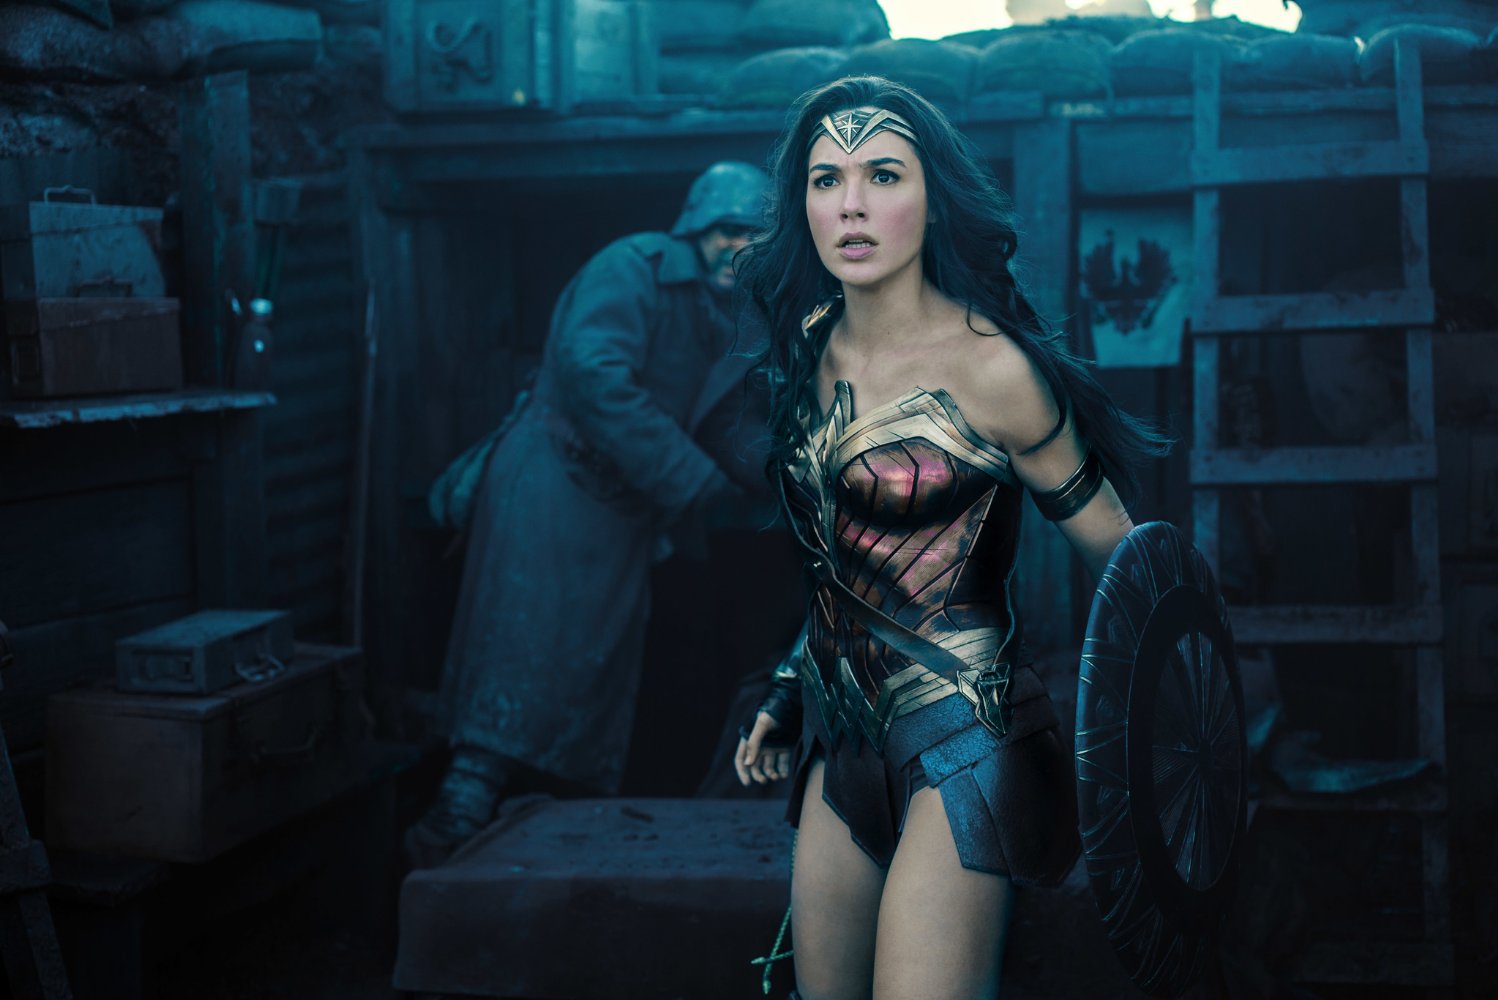 'Wonder Woman' was the biggest Oscar snub at 2018 Academy Awards according to Fandango survey